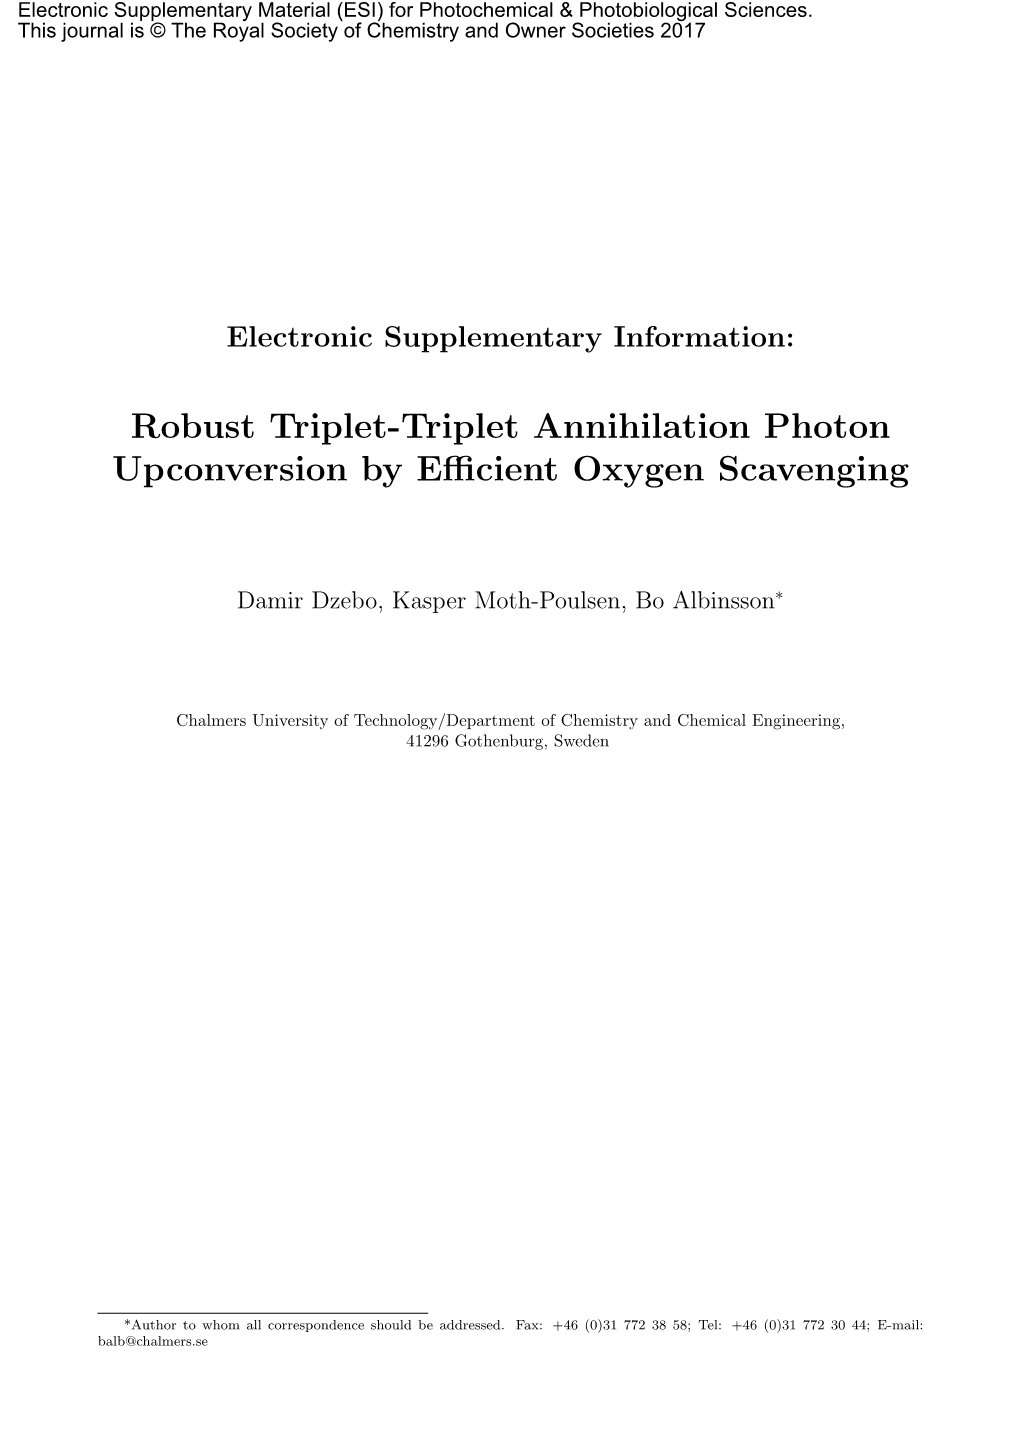 Robust Triplet-Triplet Annihilation Photon Upconversion by Efficient Oxygen Scavenging